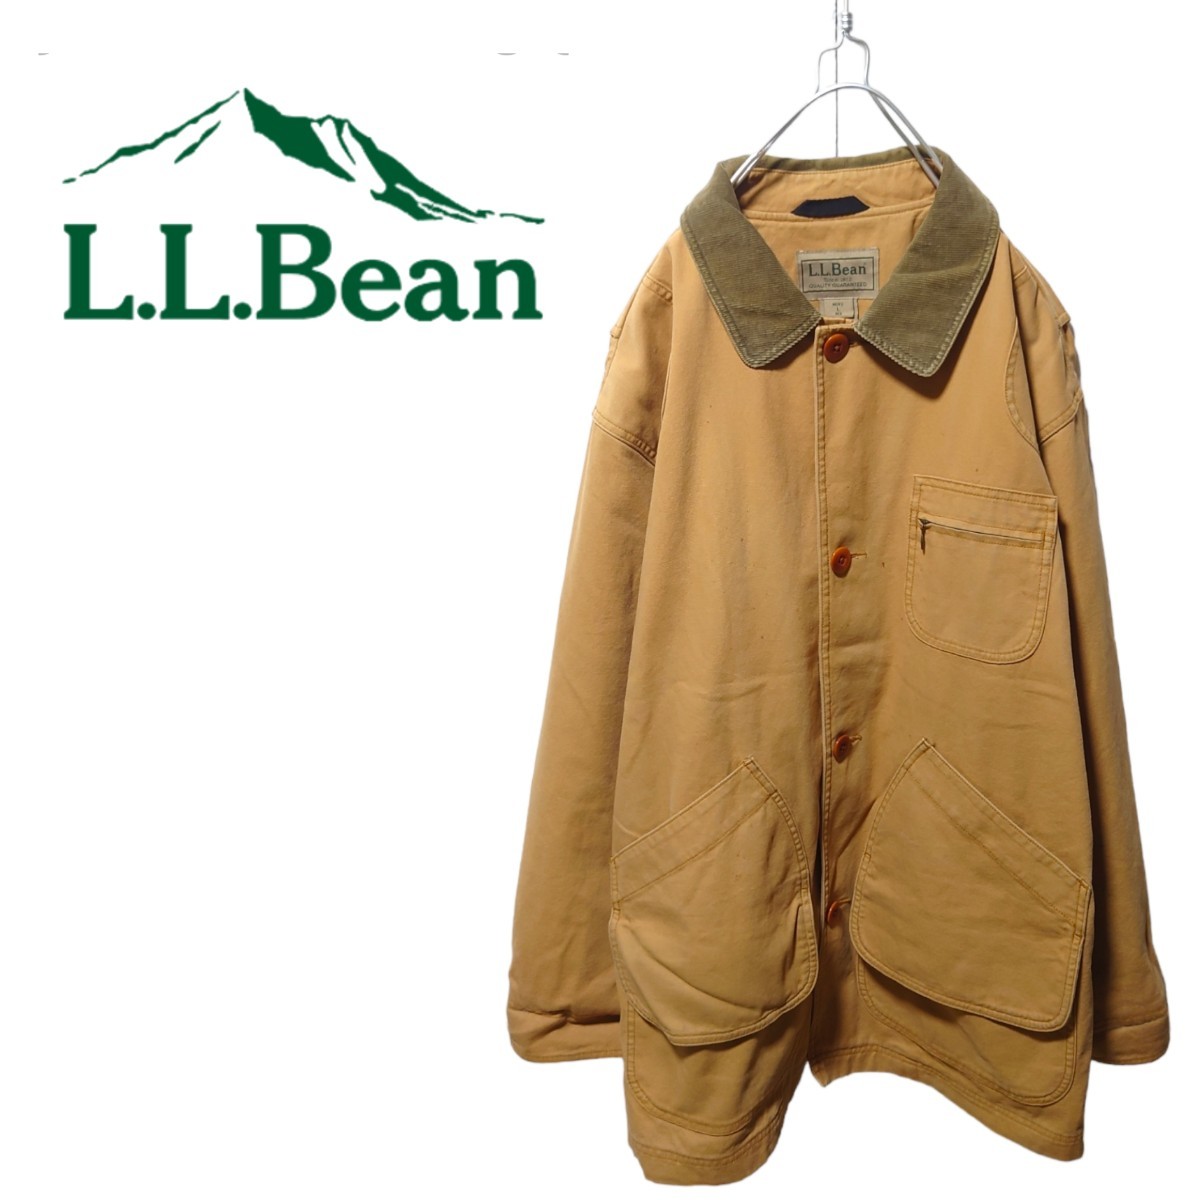 【L.L.Bean】コーデュロイ襟 ハンティングジャケット S-115